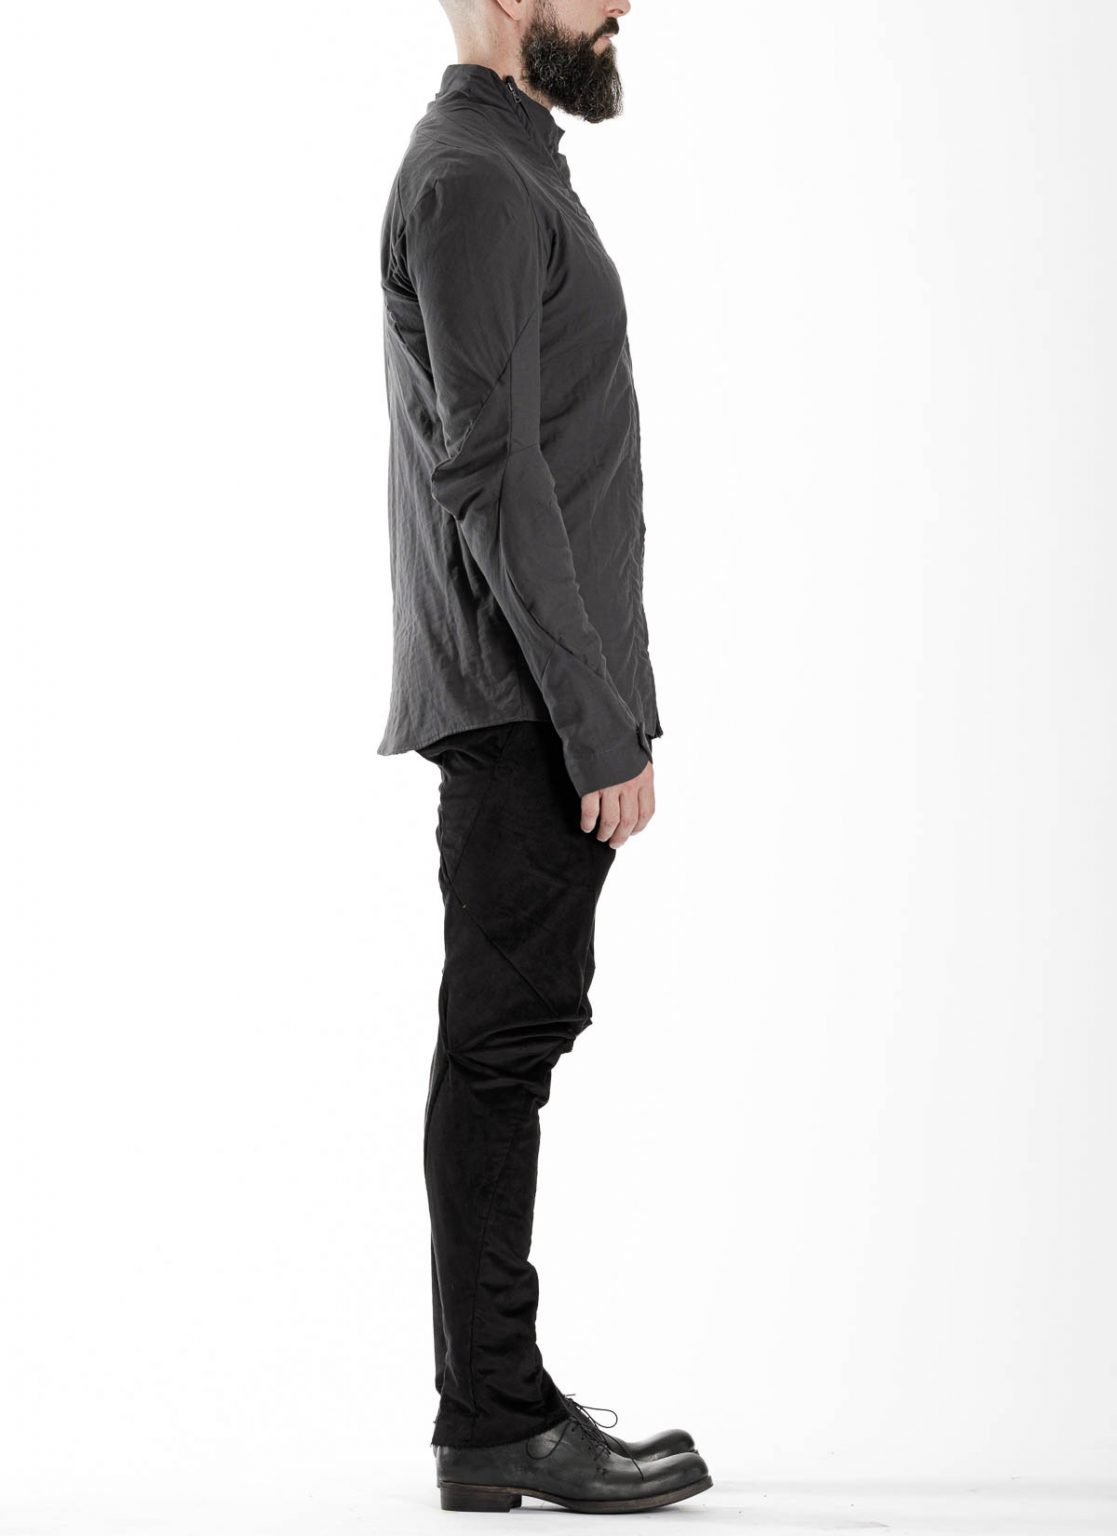 hide-m | LEON EMANUEL BLANCK Distortion Dress Shirt, black cotton